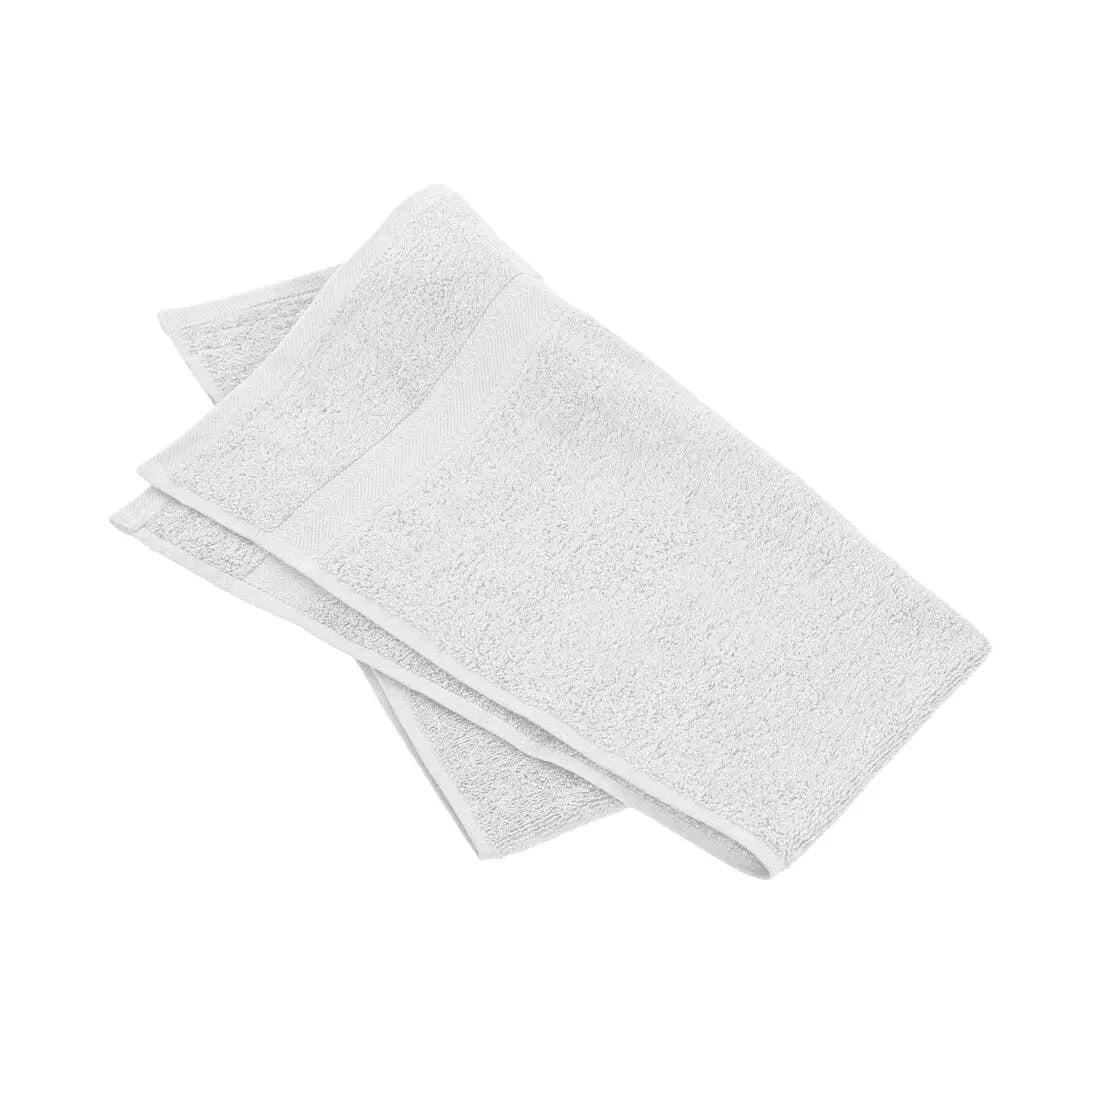 white towel